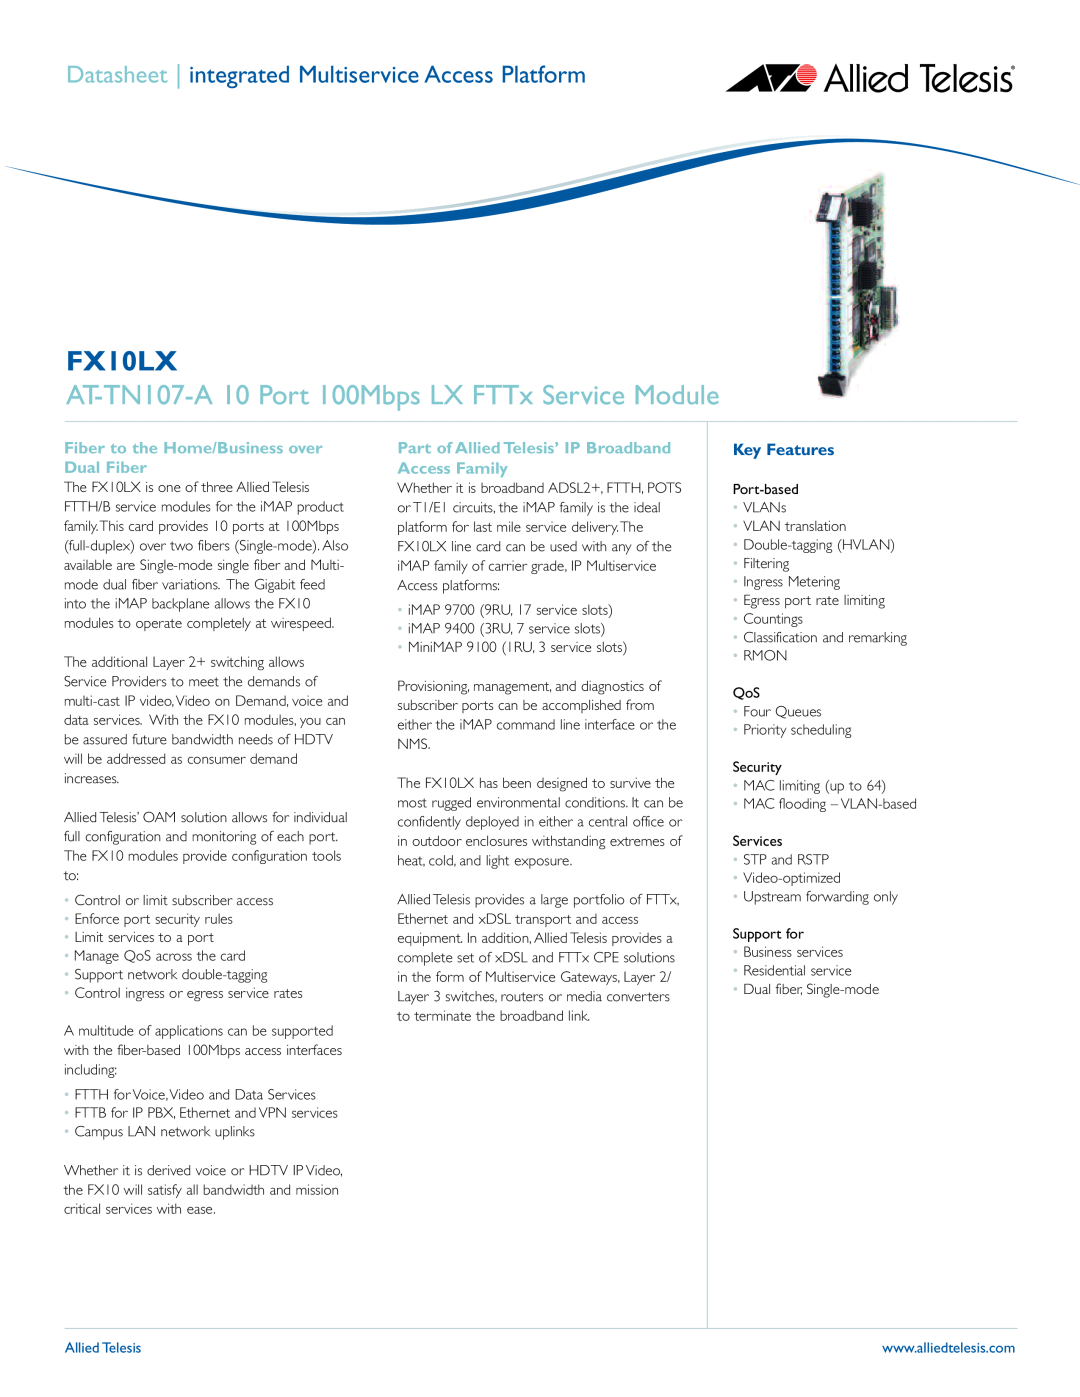 Allied Telesis iMAP FX10LX manual AT-TN107-A 10 Port 100Mbps LX FTTx Service Module, Key Features 